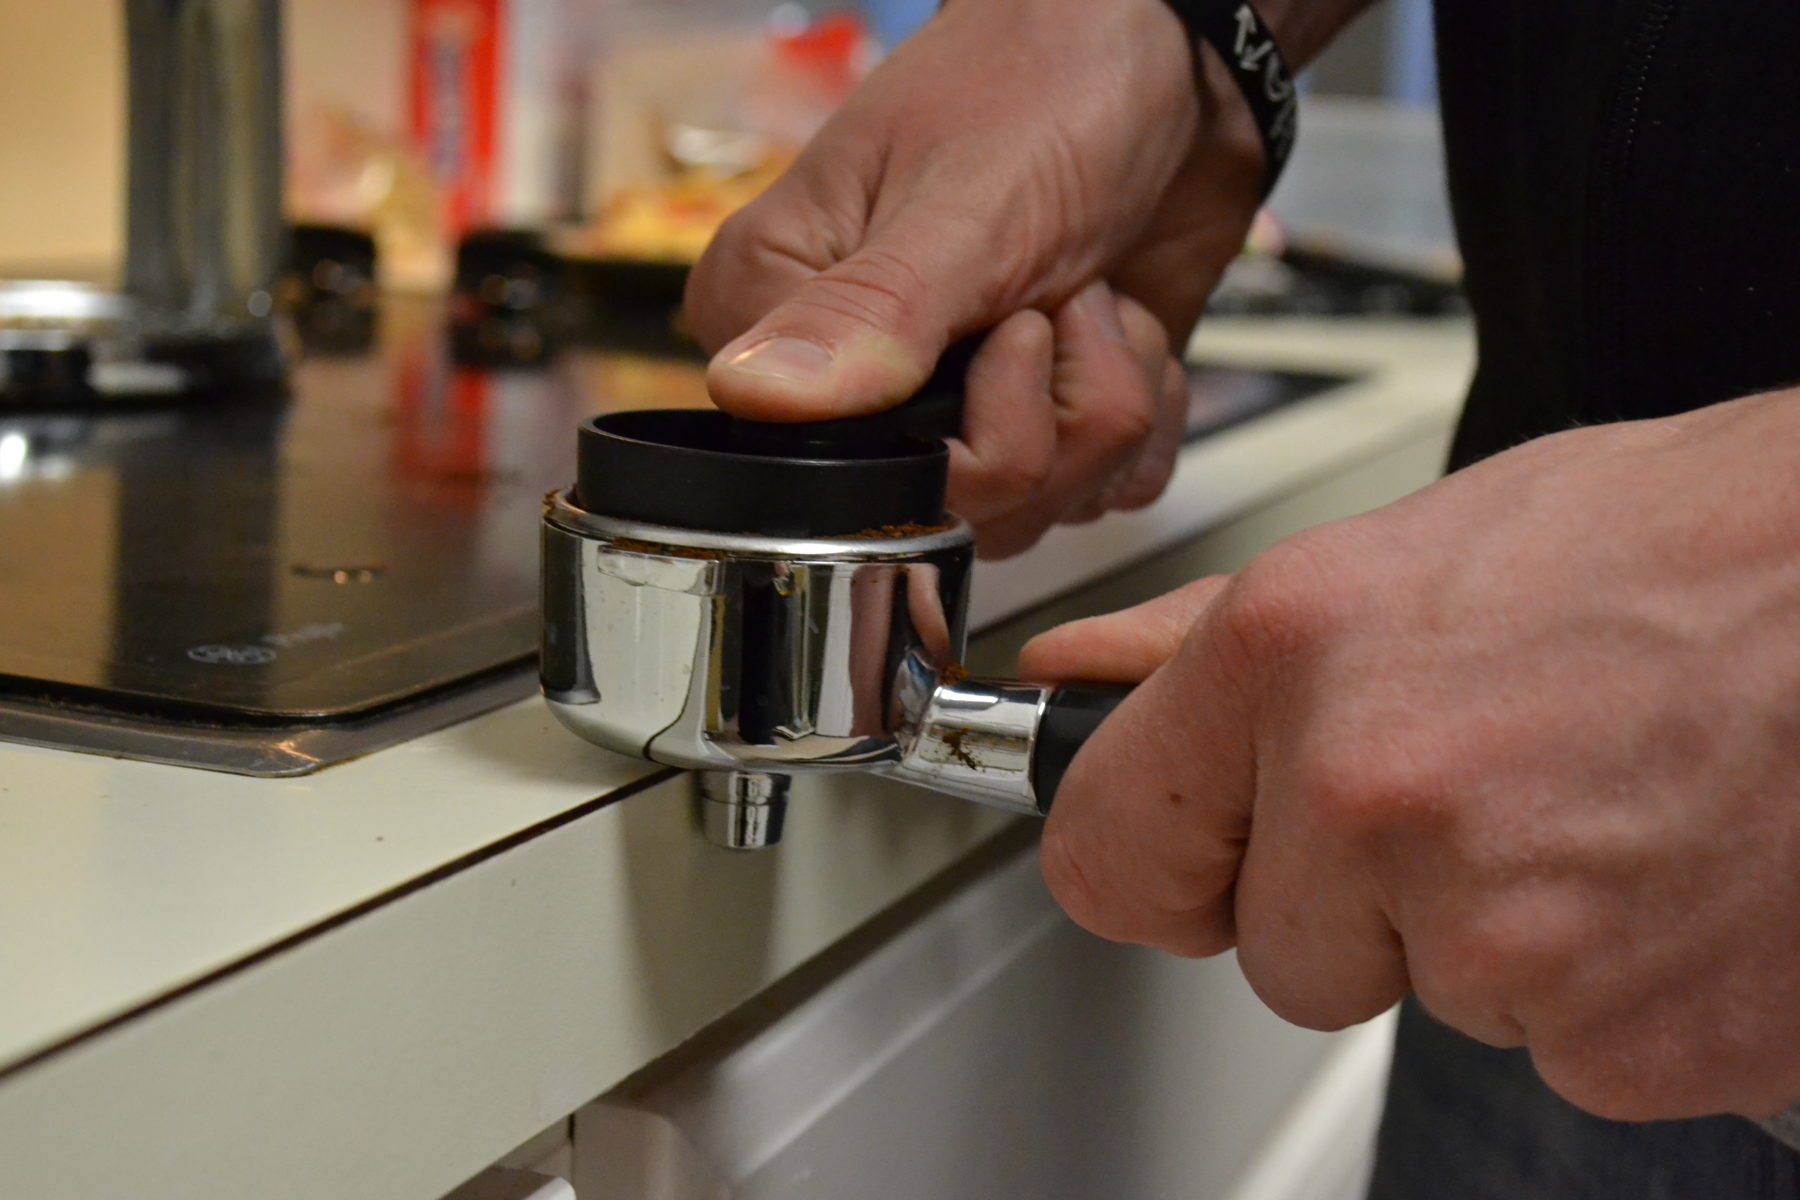 ROK Espresso Maker has a manual non-electric design » Gadget Flow